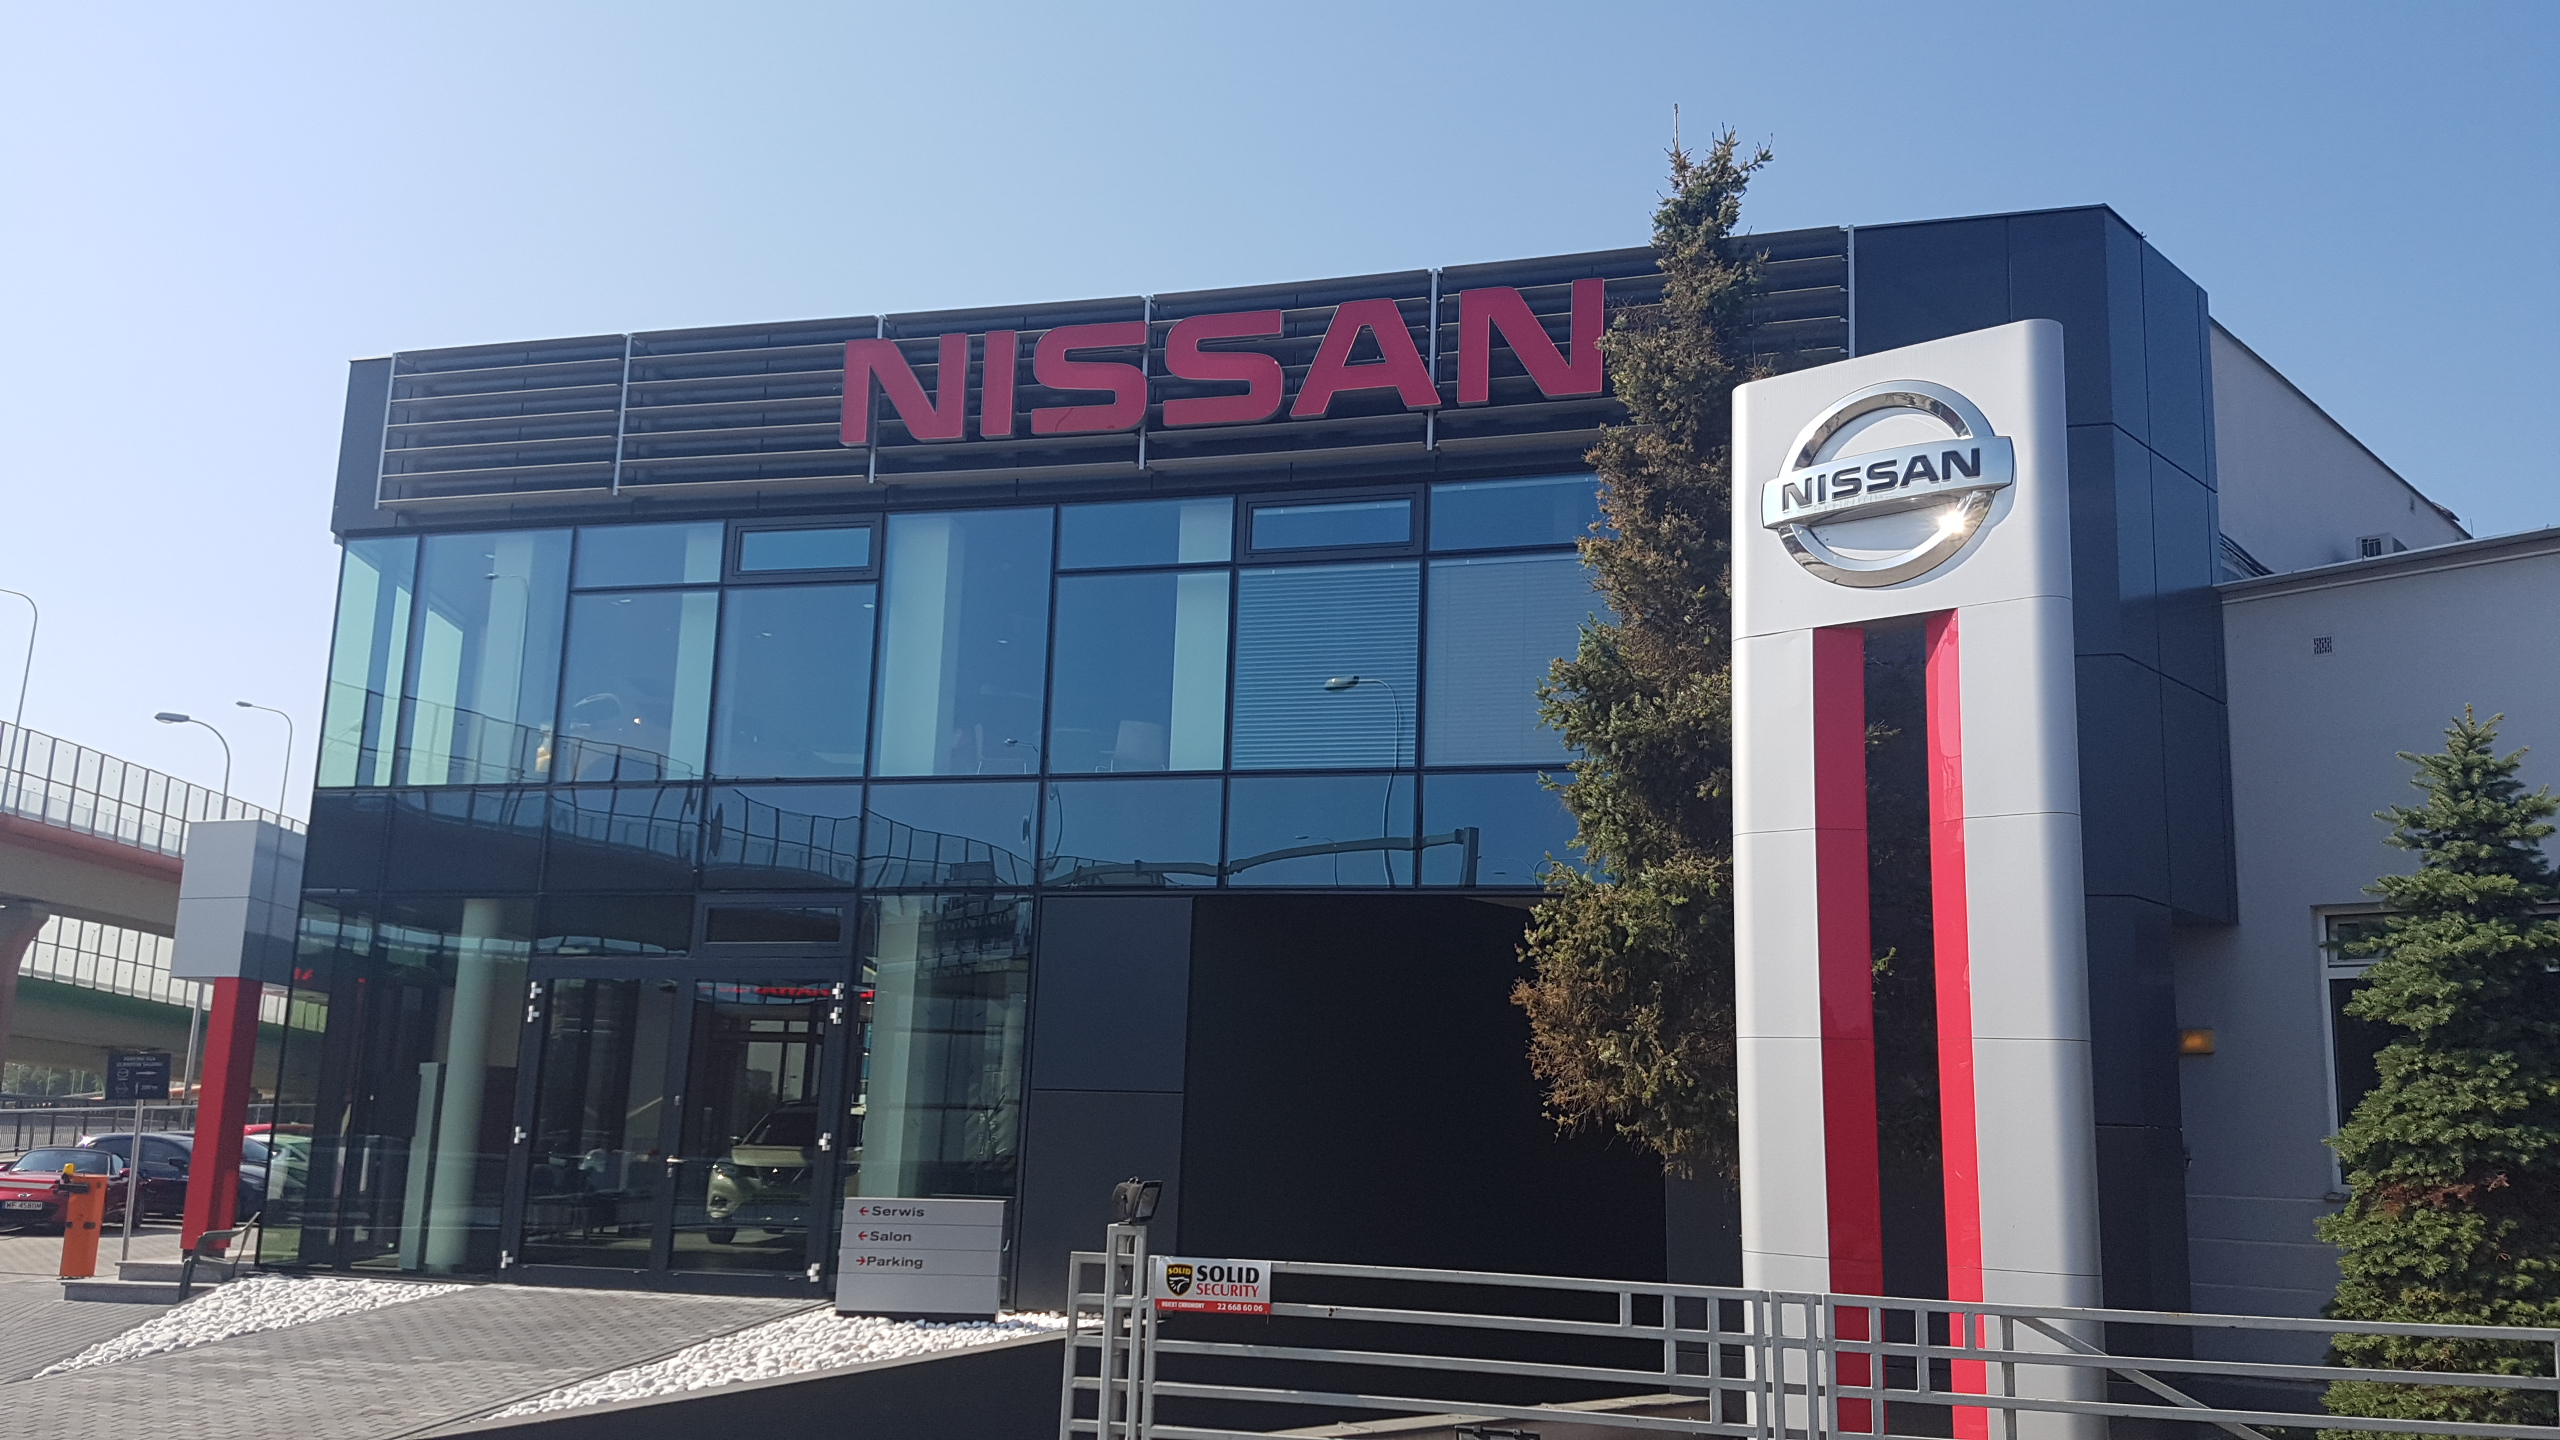 Nissan - Autohaus